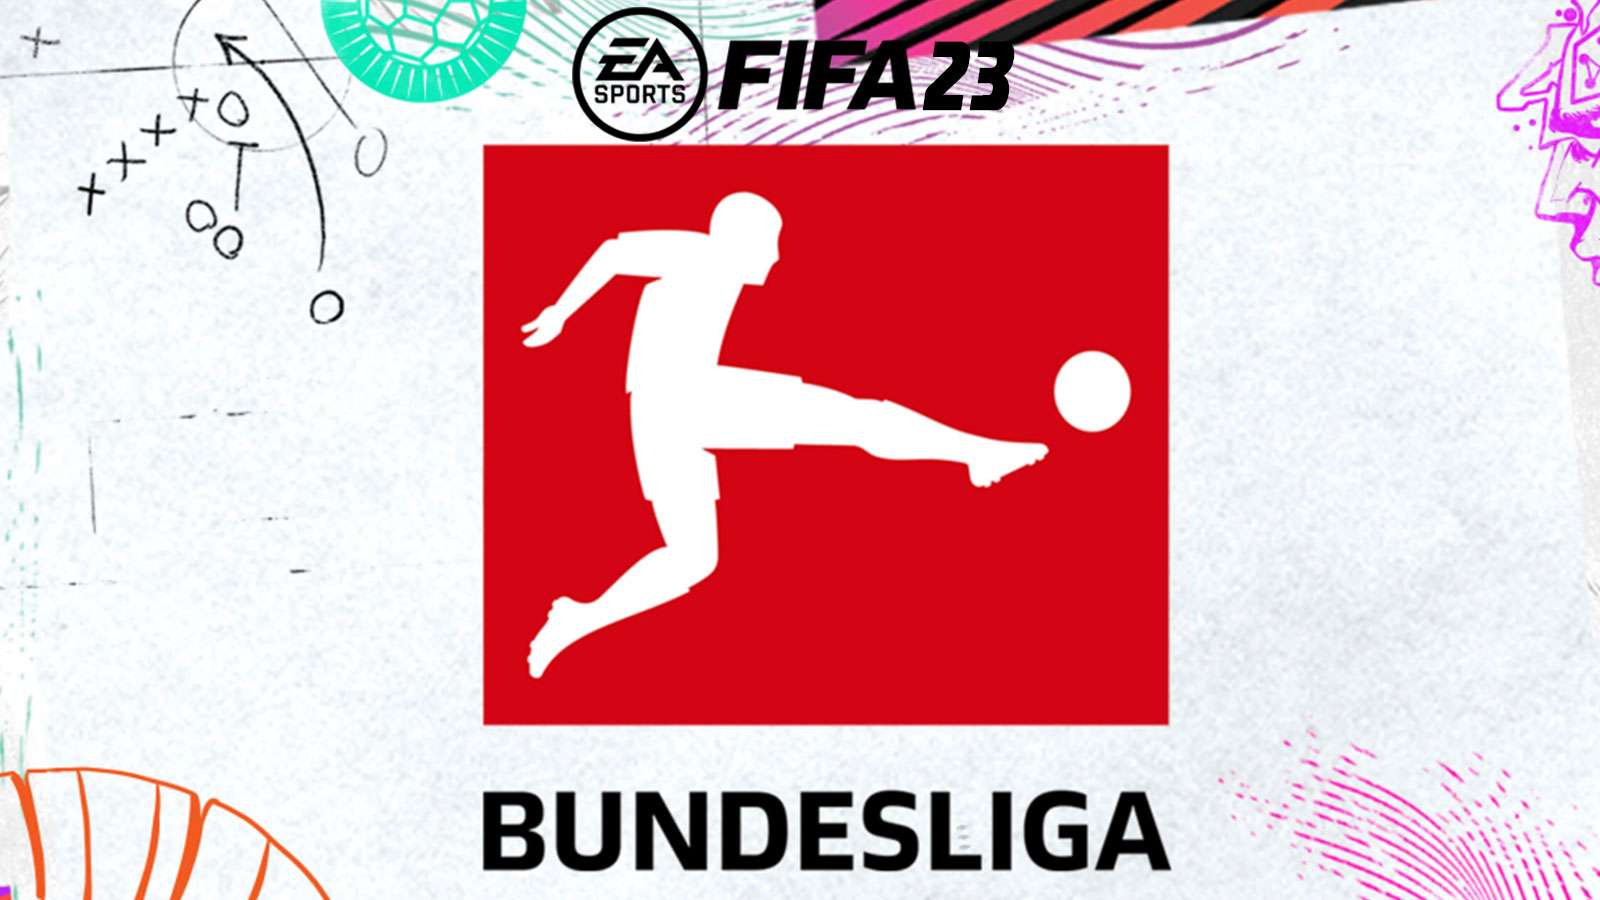 Bundesliga FIFA 23